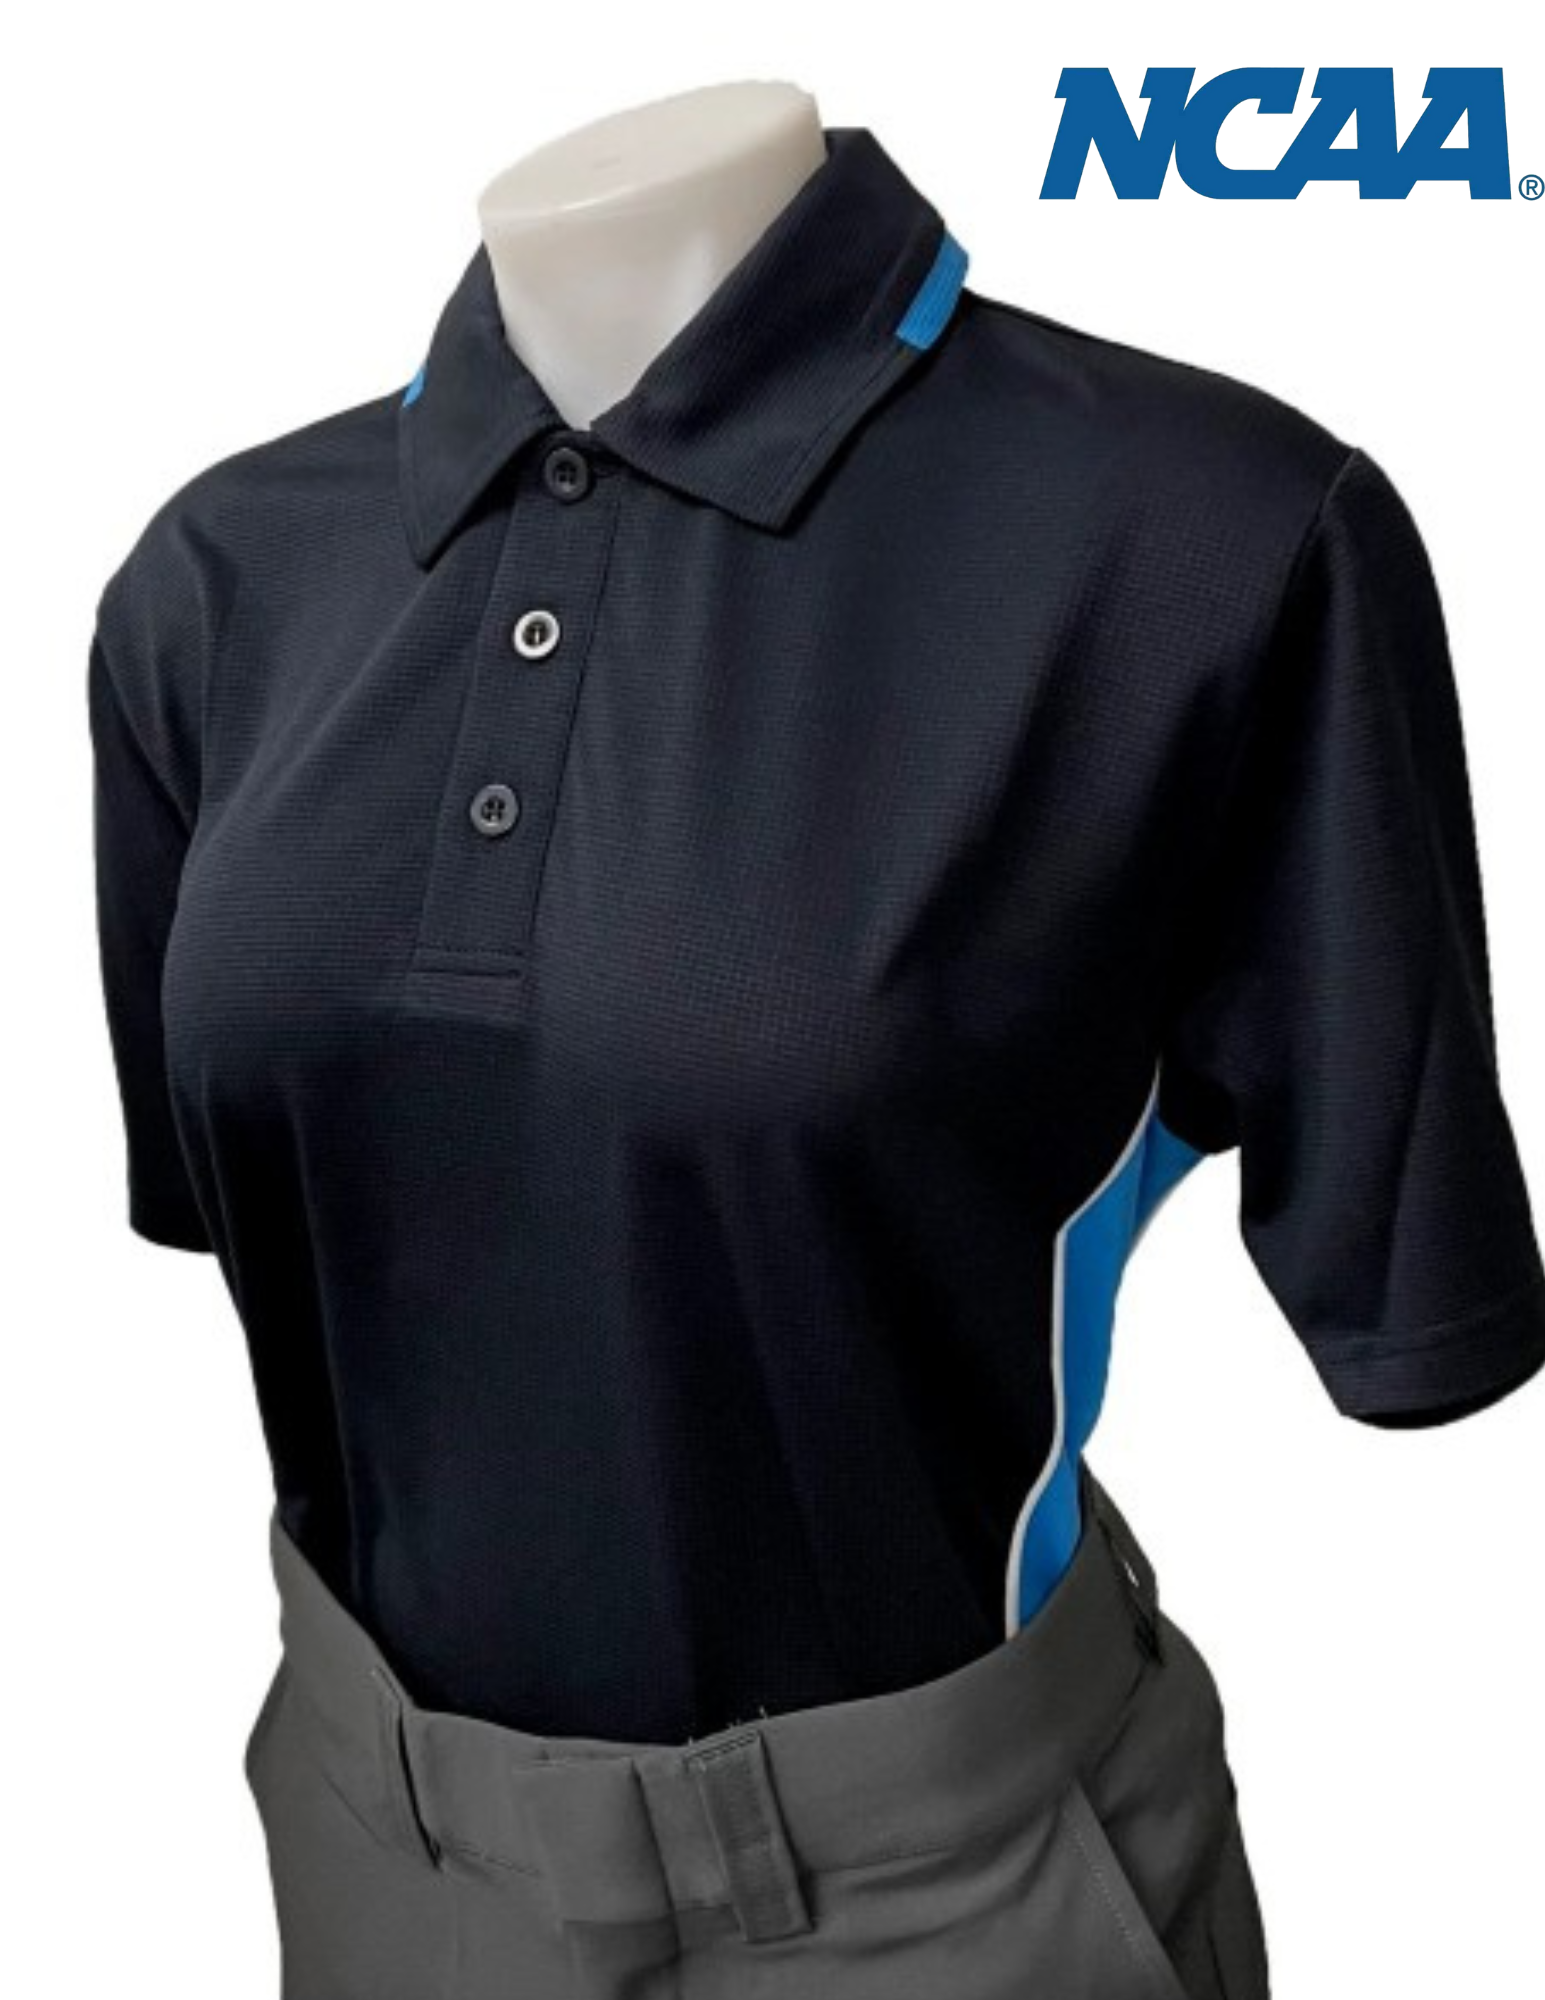 Women's BODY FLEX NCAA SOFTBALL Style Short Sleeve Umpire Shirts - Midnight Navy